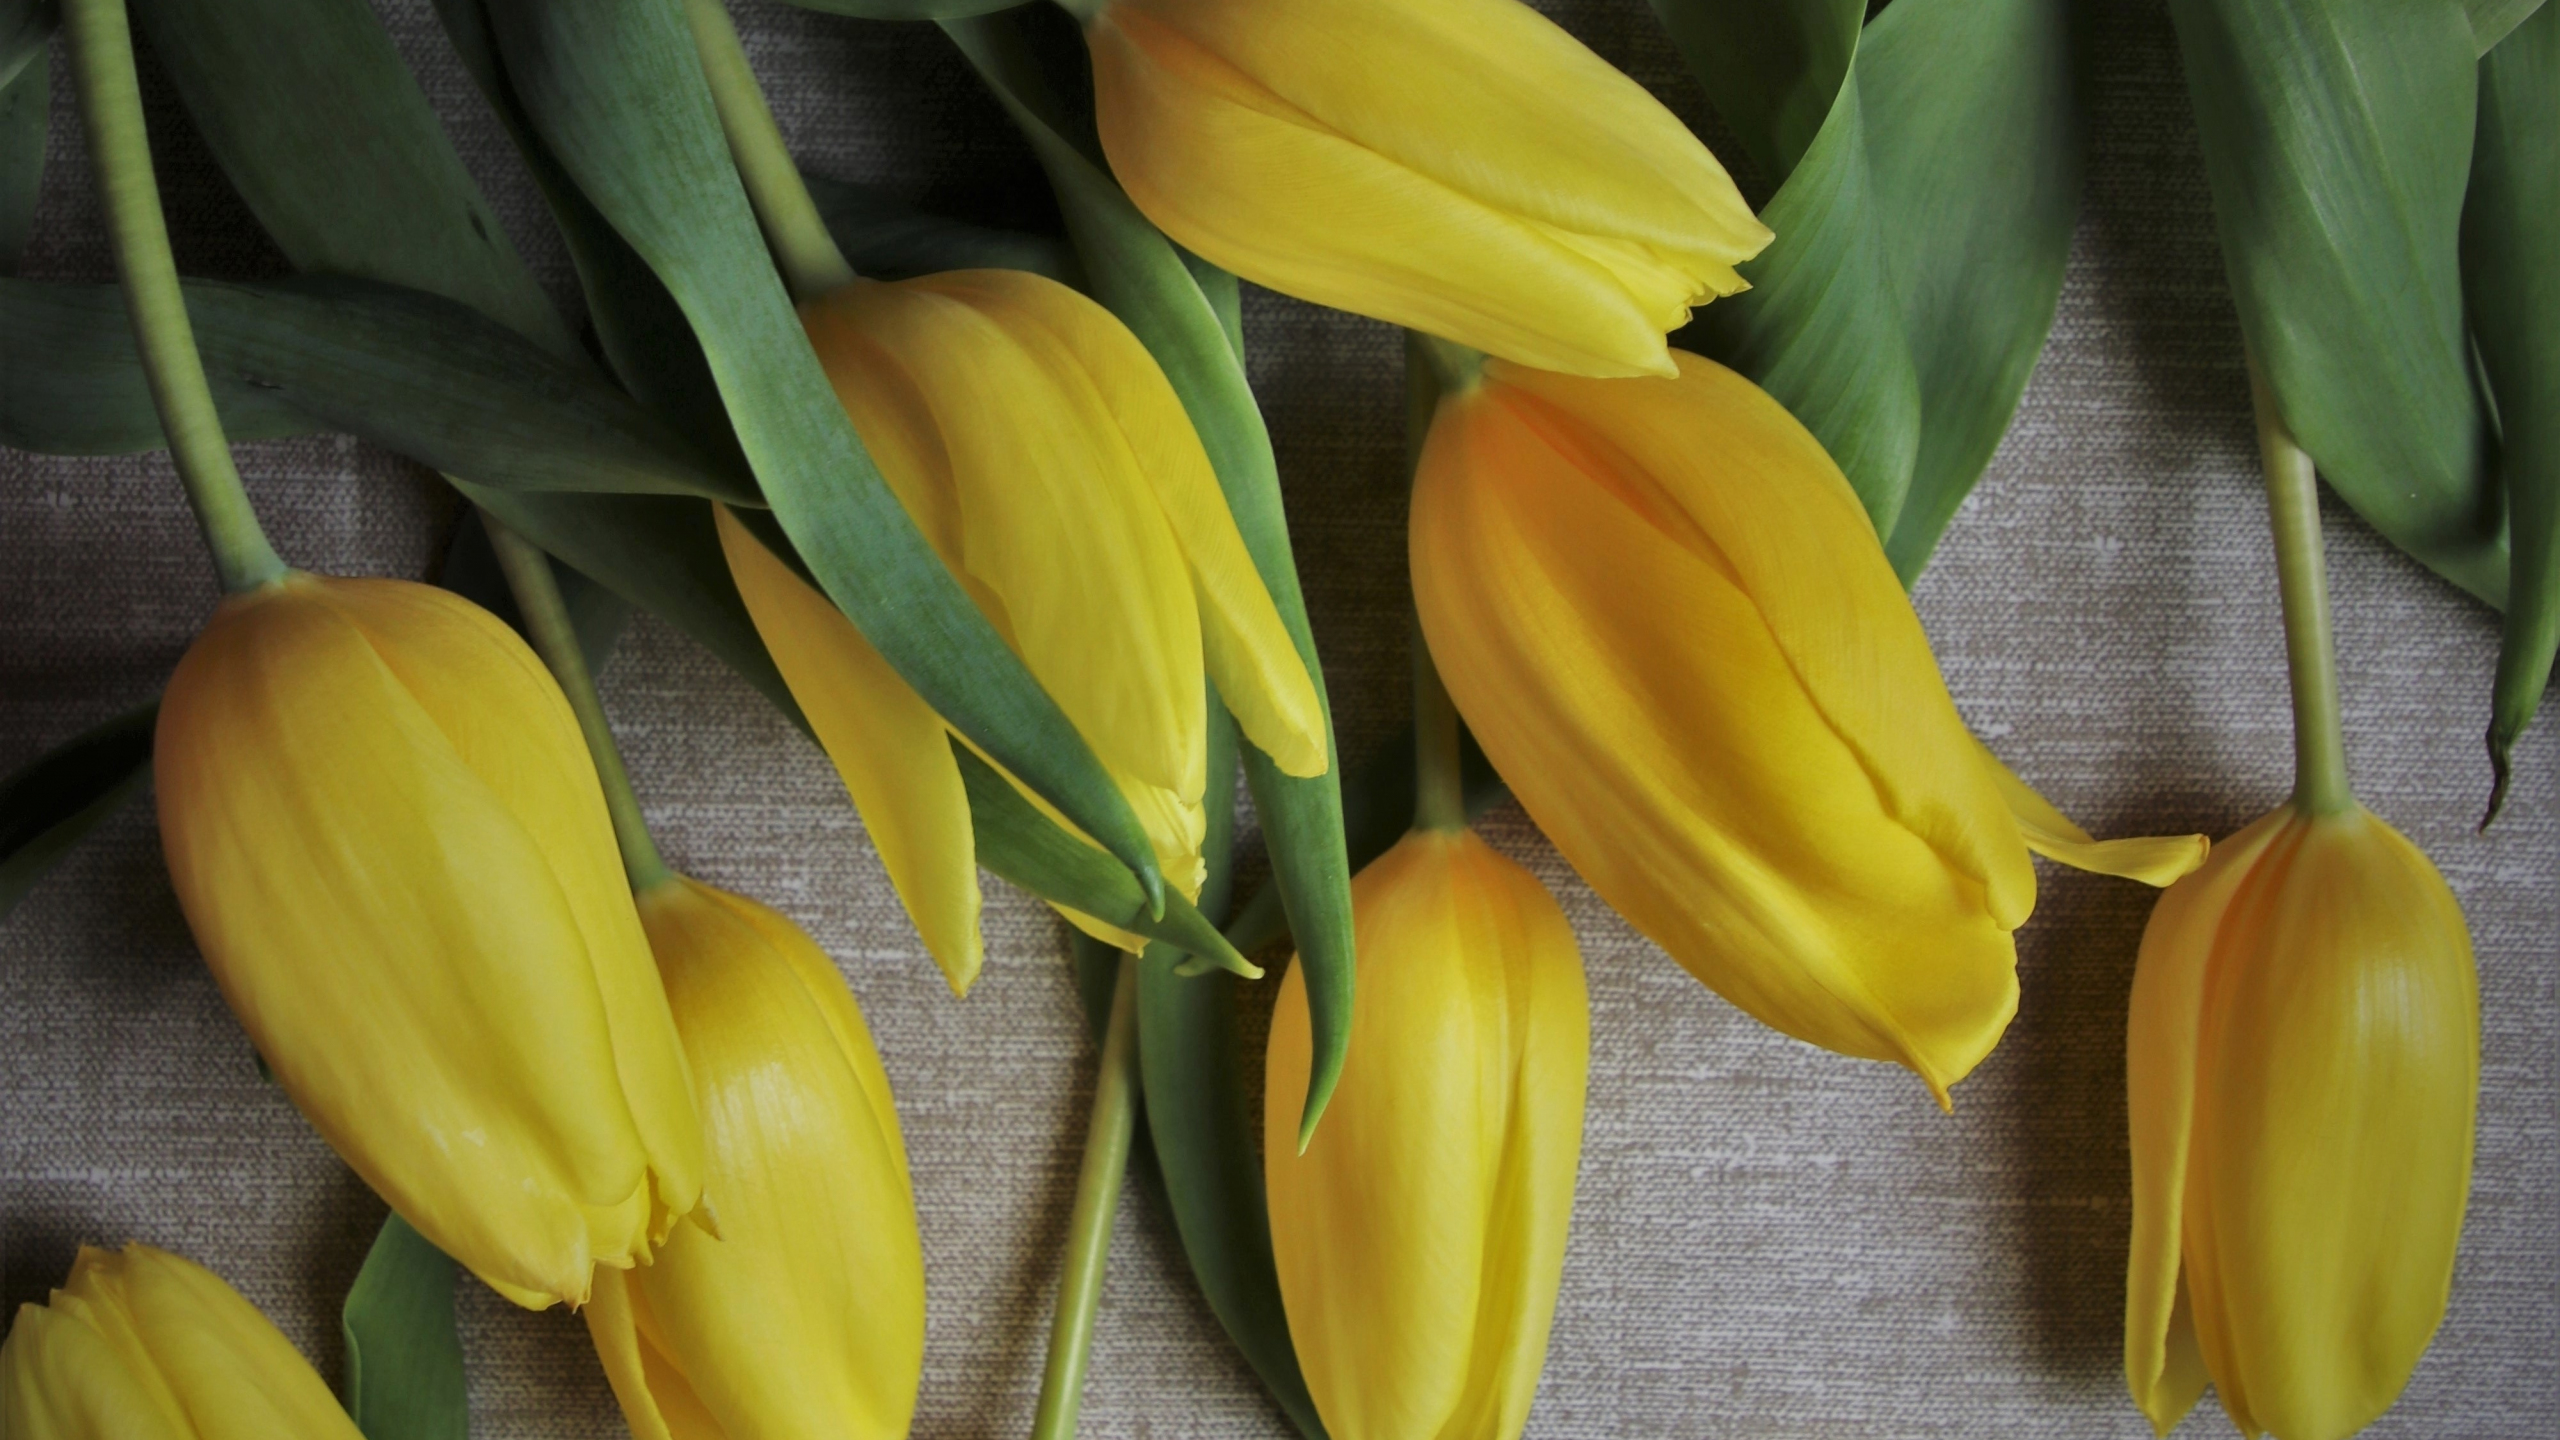 Download wallpaper 2560x1440 yellow tulips, flowers, fresh, dual wide ...